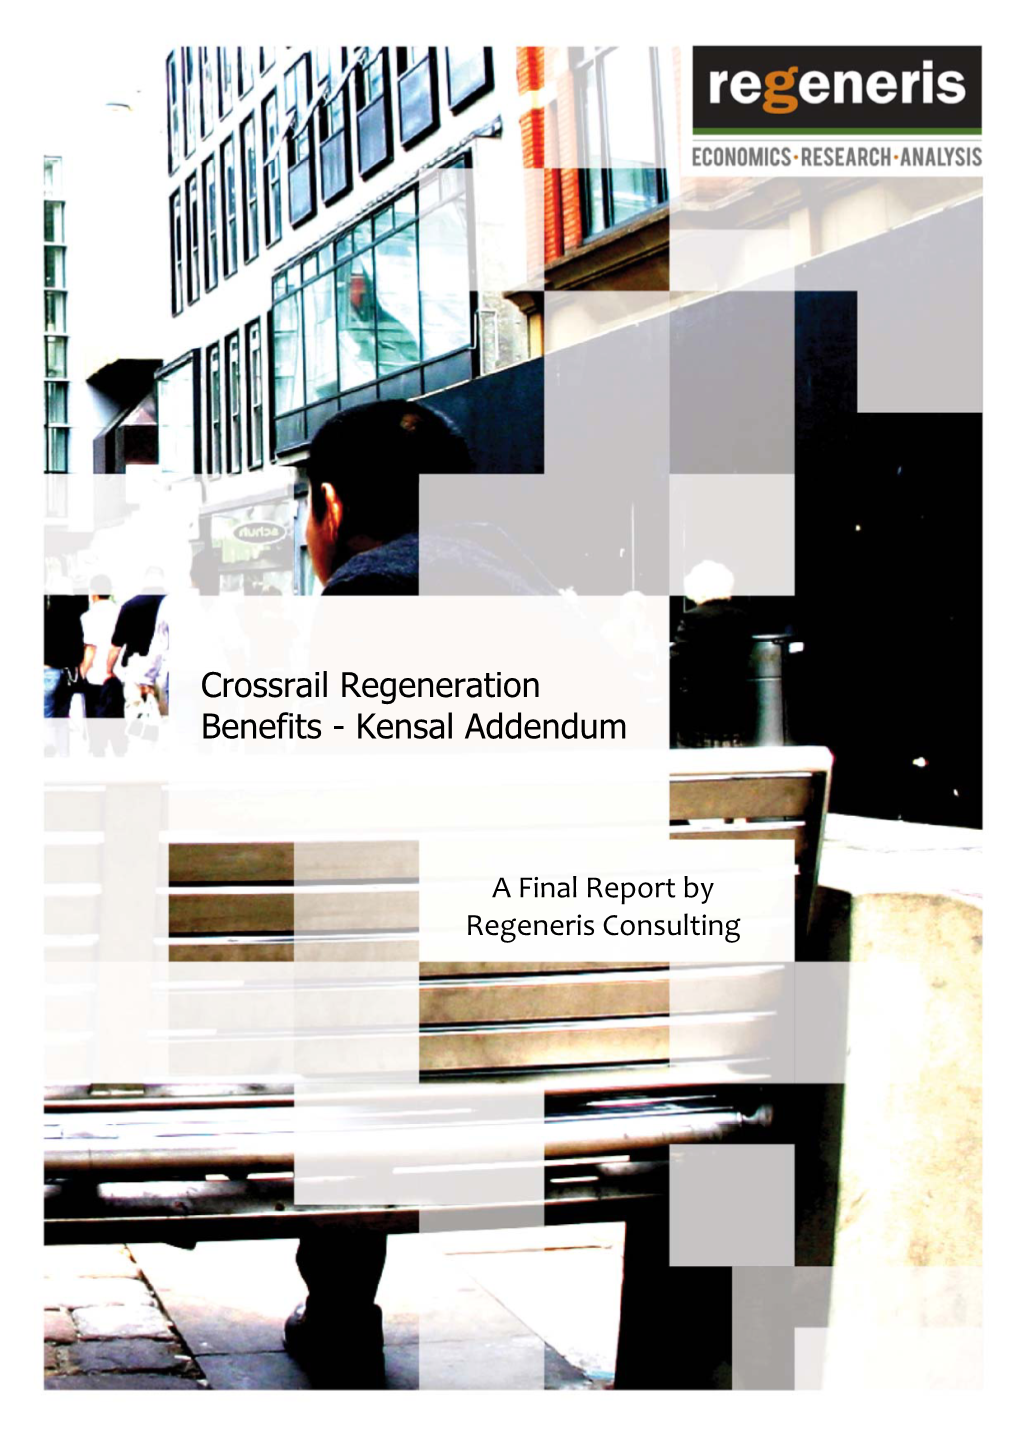 Crossrail Regeneration Benefits - Kensal Addendum